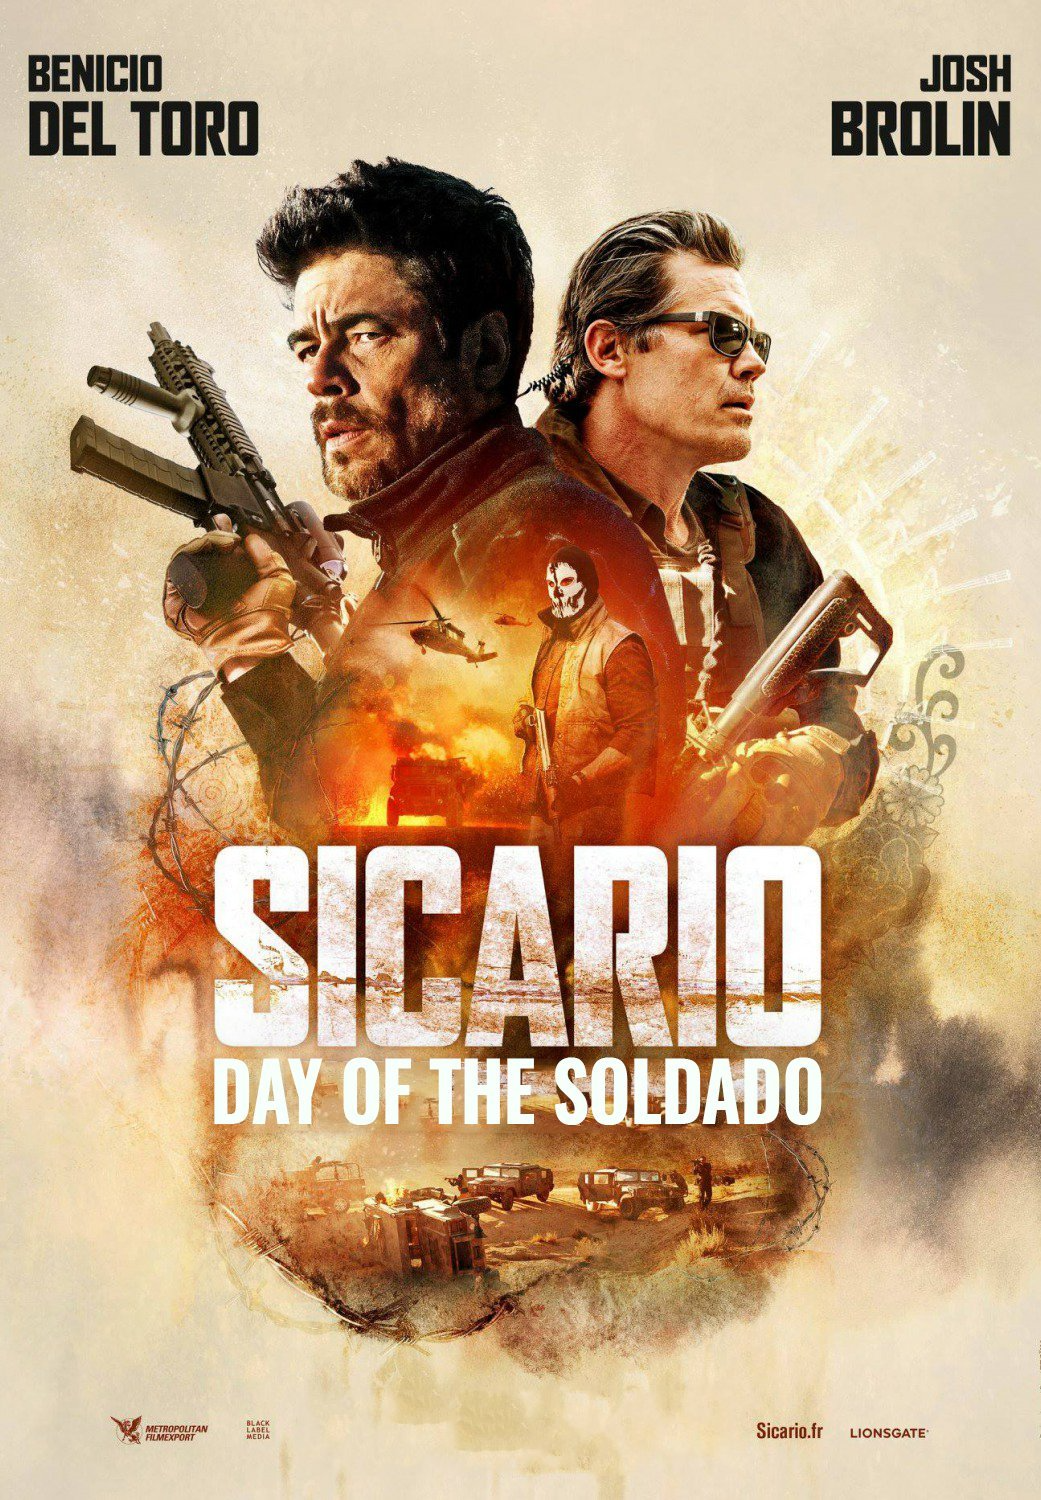 Best Josh Brolin Movies: Sicario